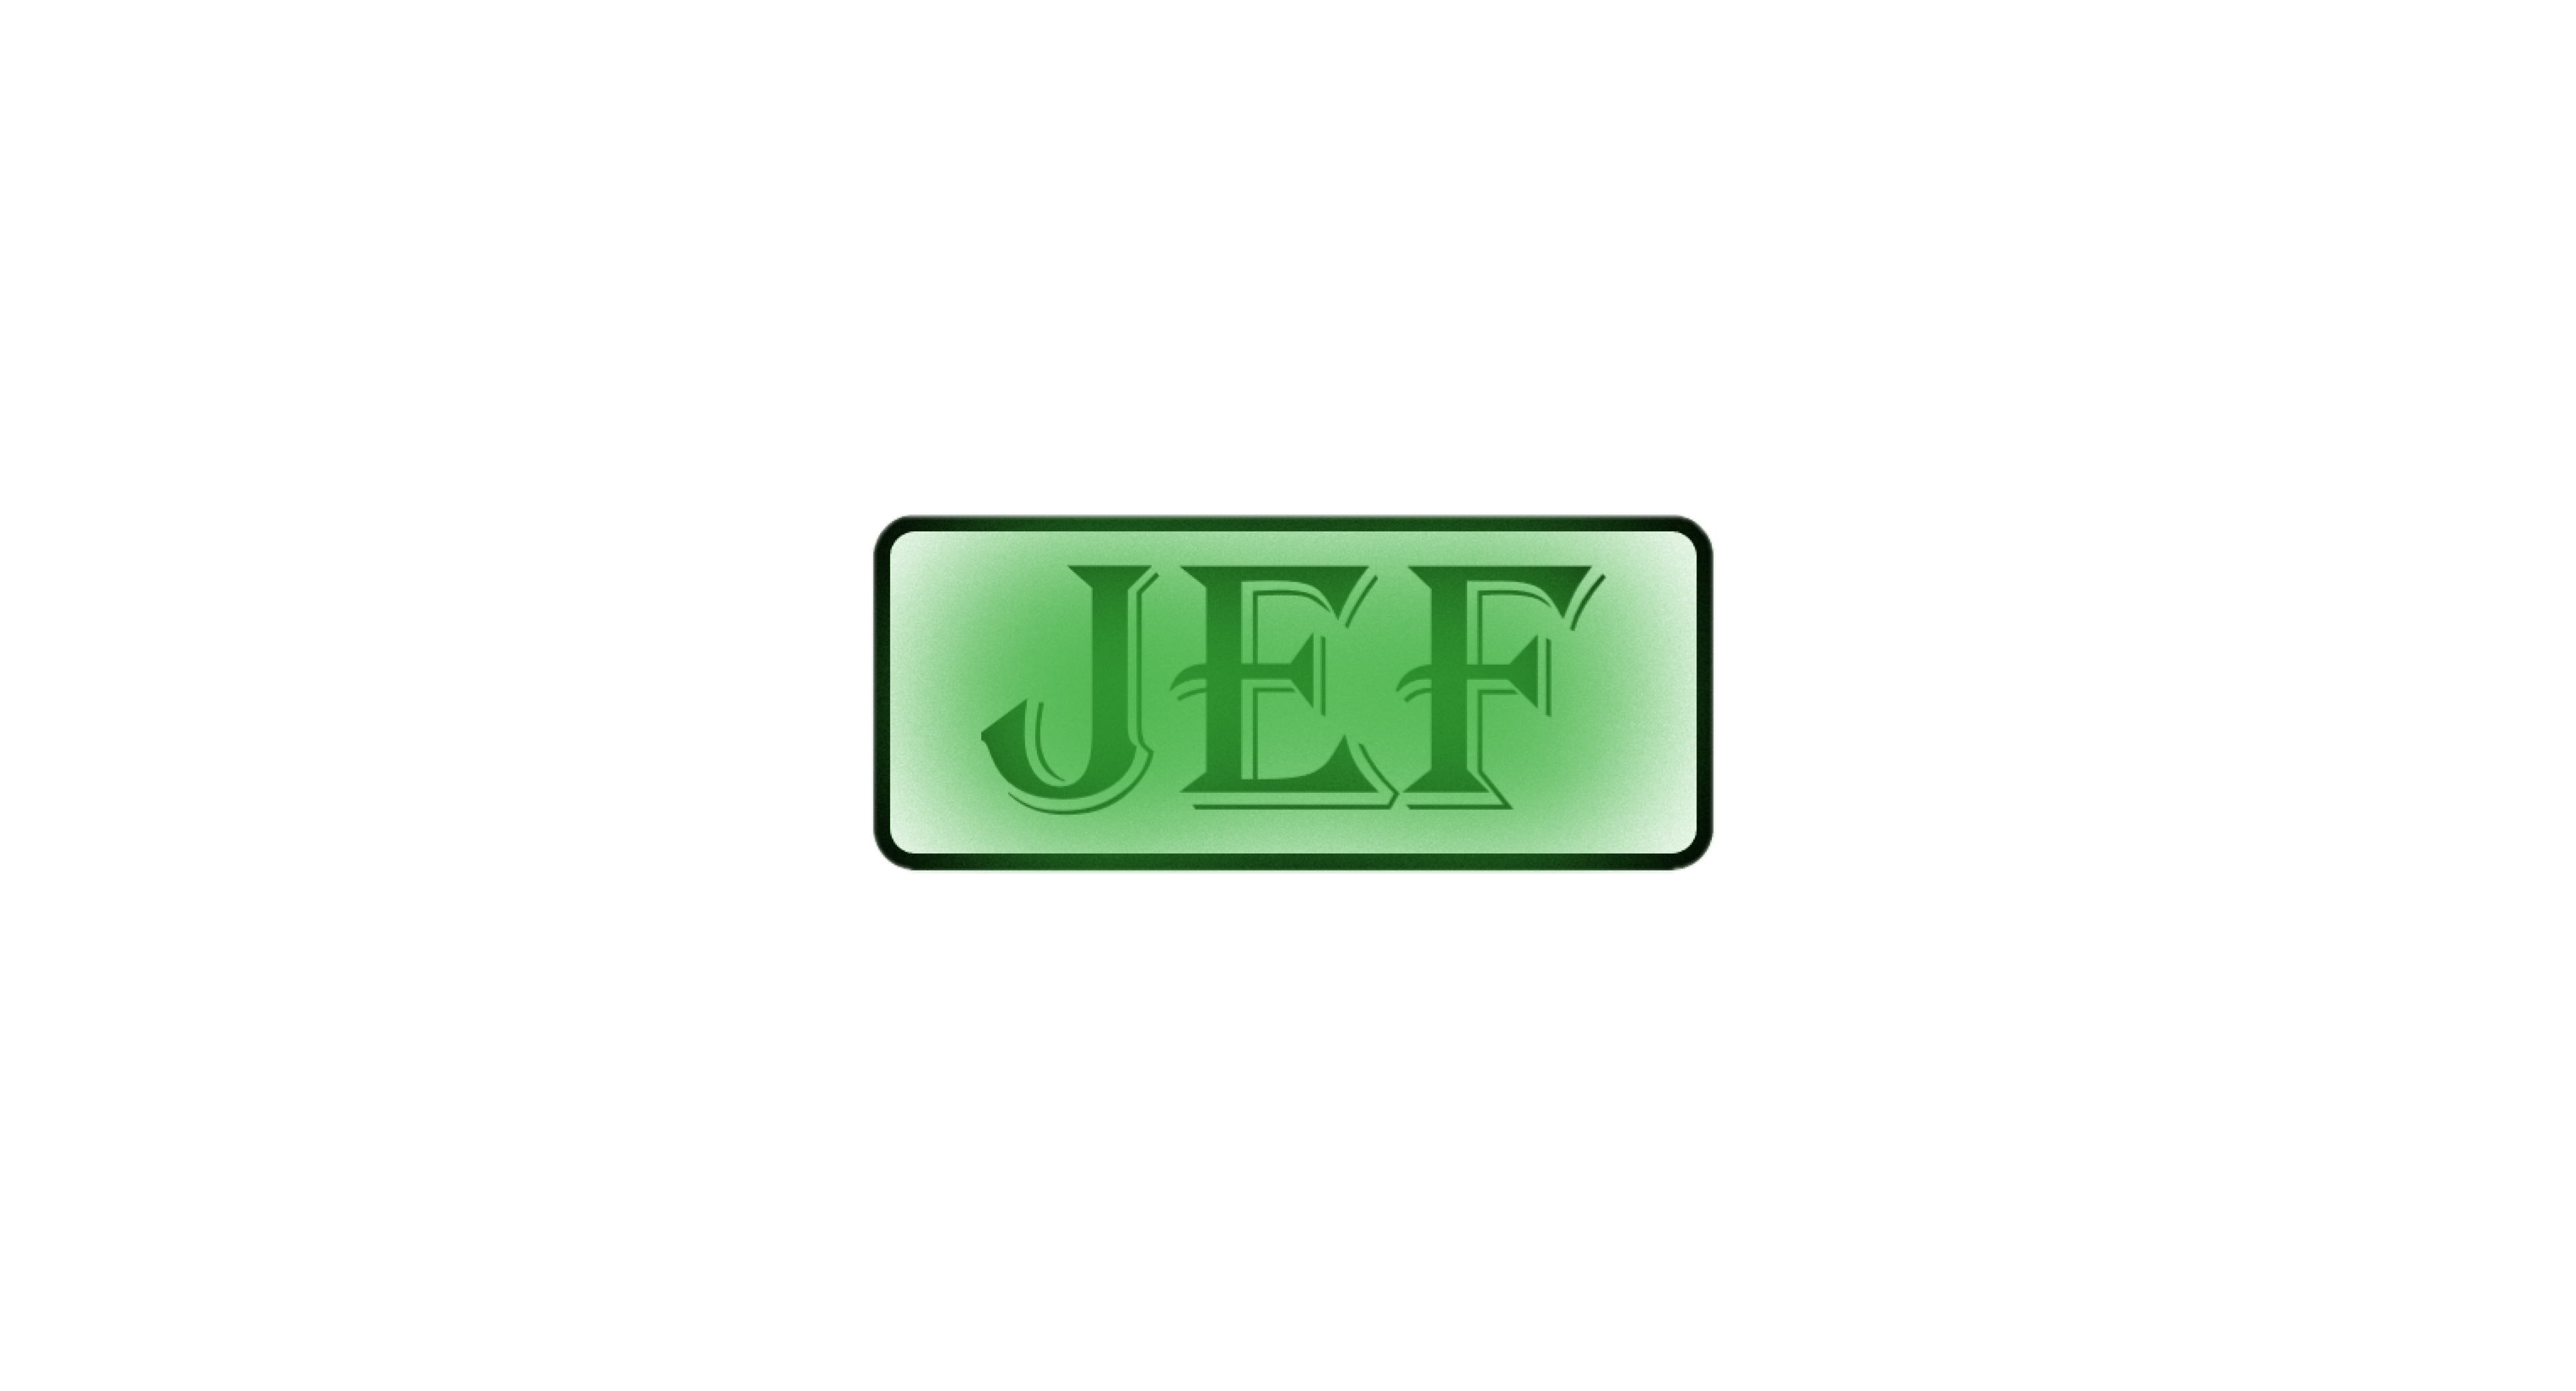 JEF29